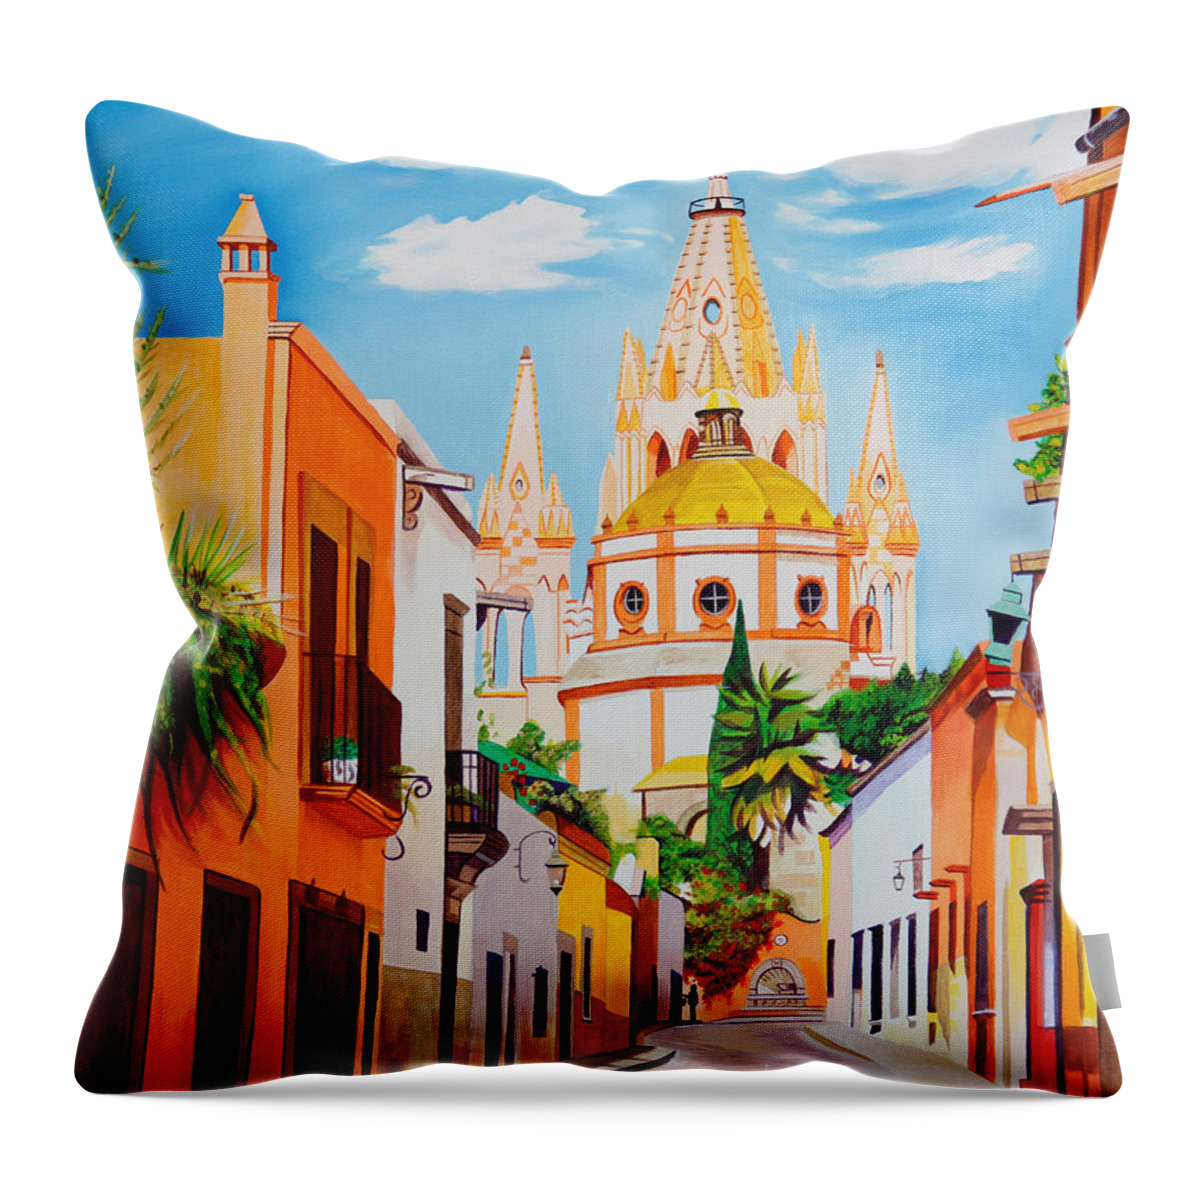 San Miguel De Allende Throw Pillow featuring the painting San Miguel de Allende by Joshua Morton